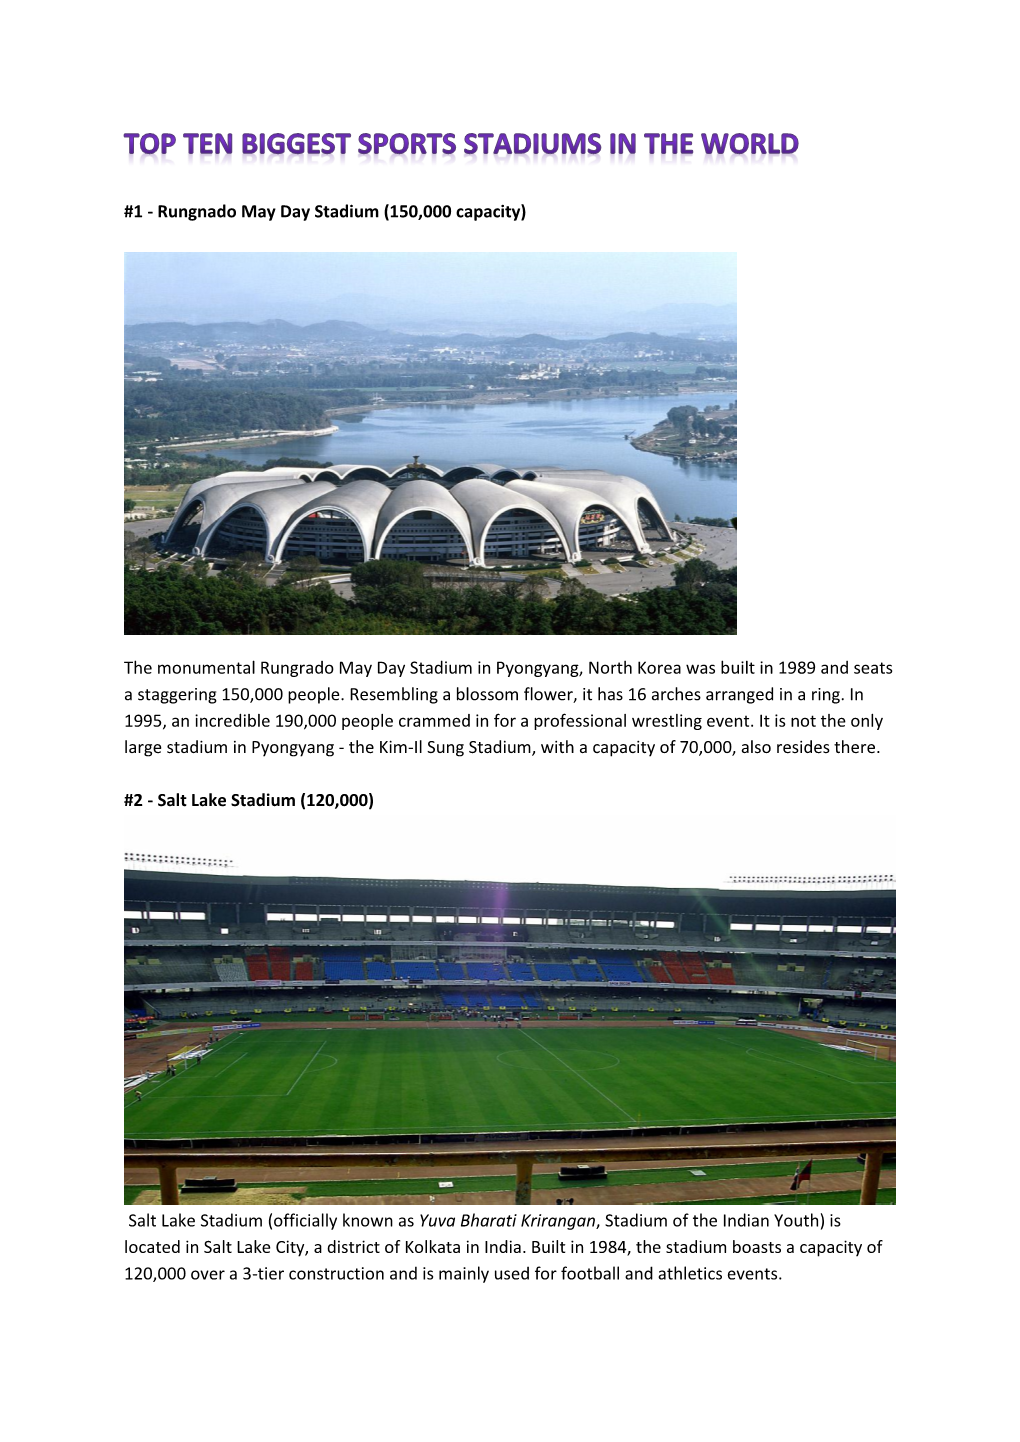 1 - Rungnado May Day Stadium (150,000 Capacity)